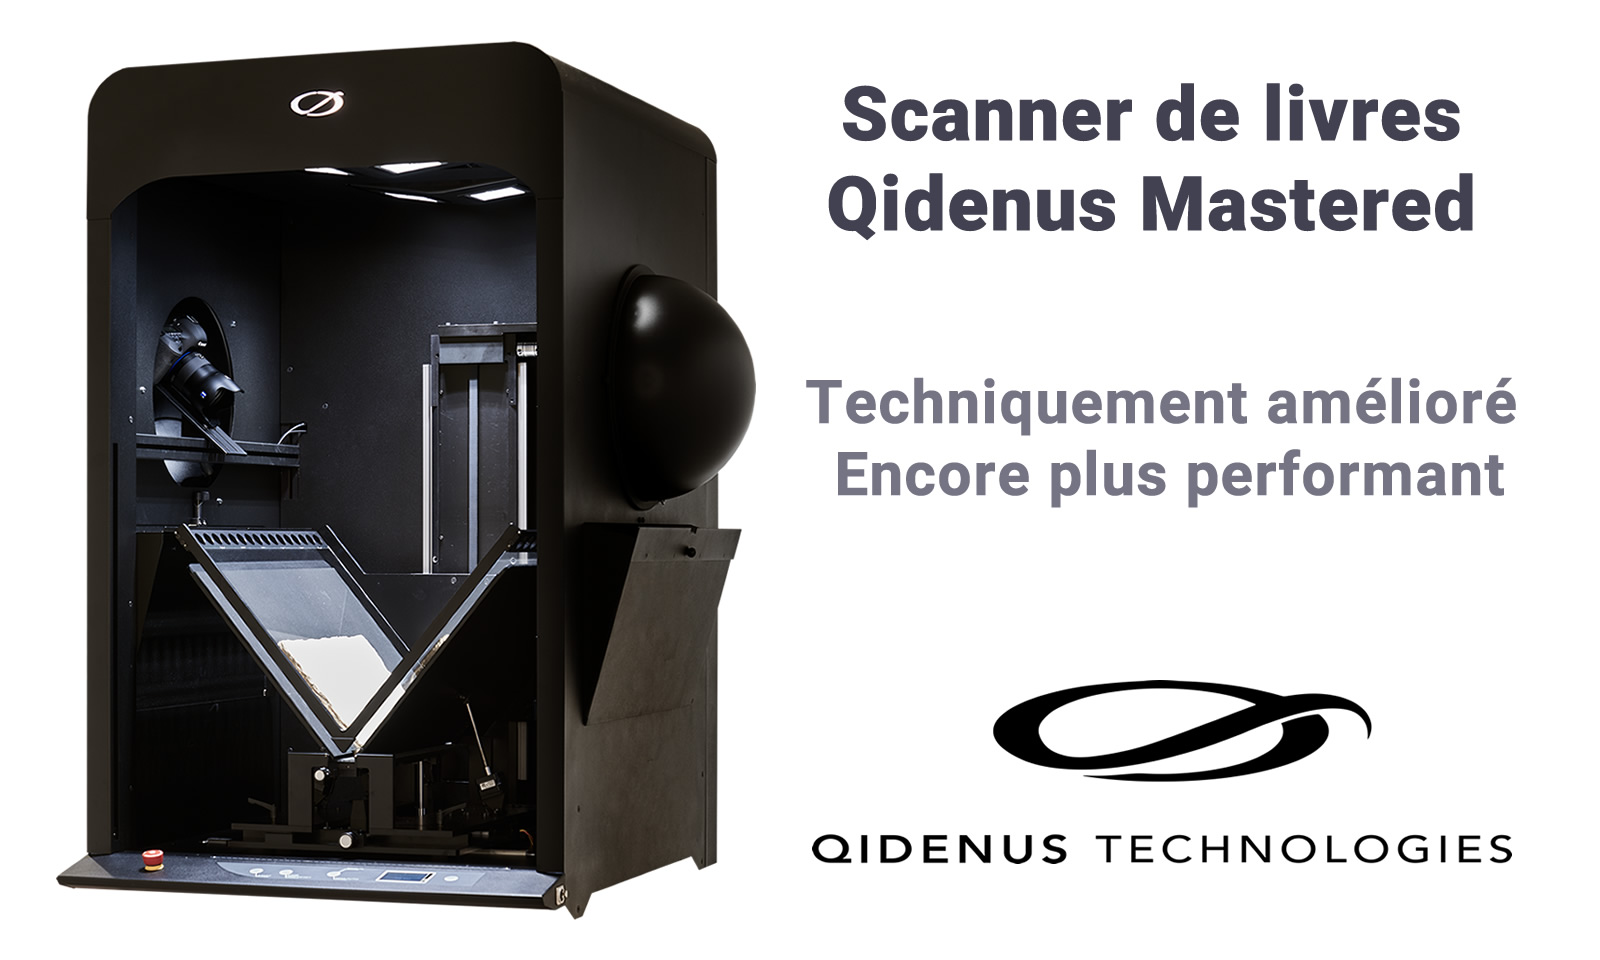 iGuana - Scanner de livres Qidenus Mastered (ultra-rapide, encore plus performant)